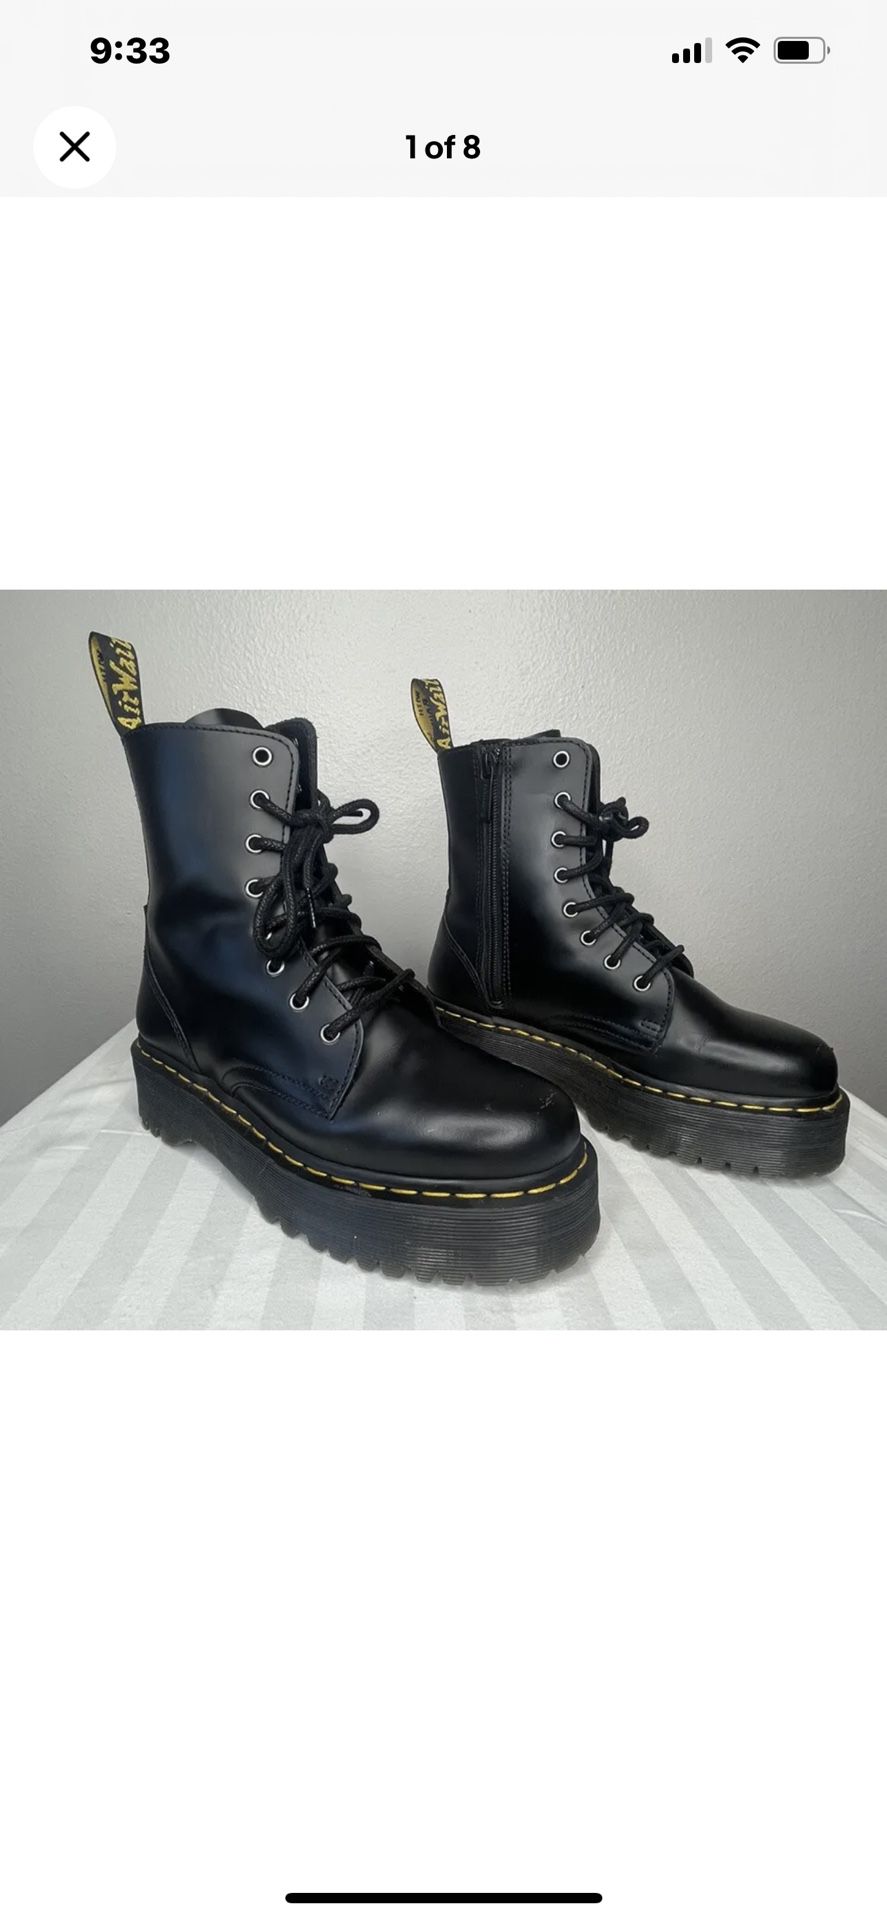 Dr Martens Jadon Platform Black Smooth Leather Zip Boots Sz U.S. 8/EU 39